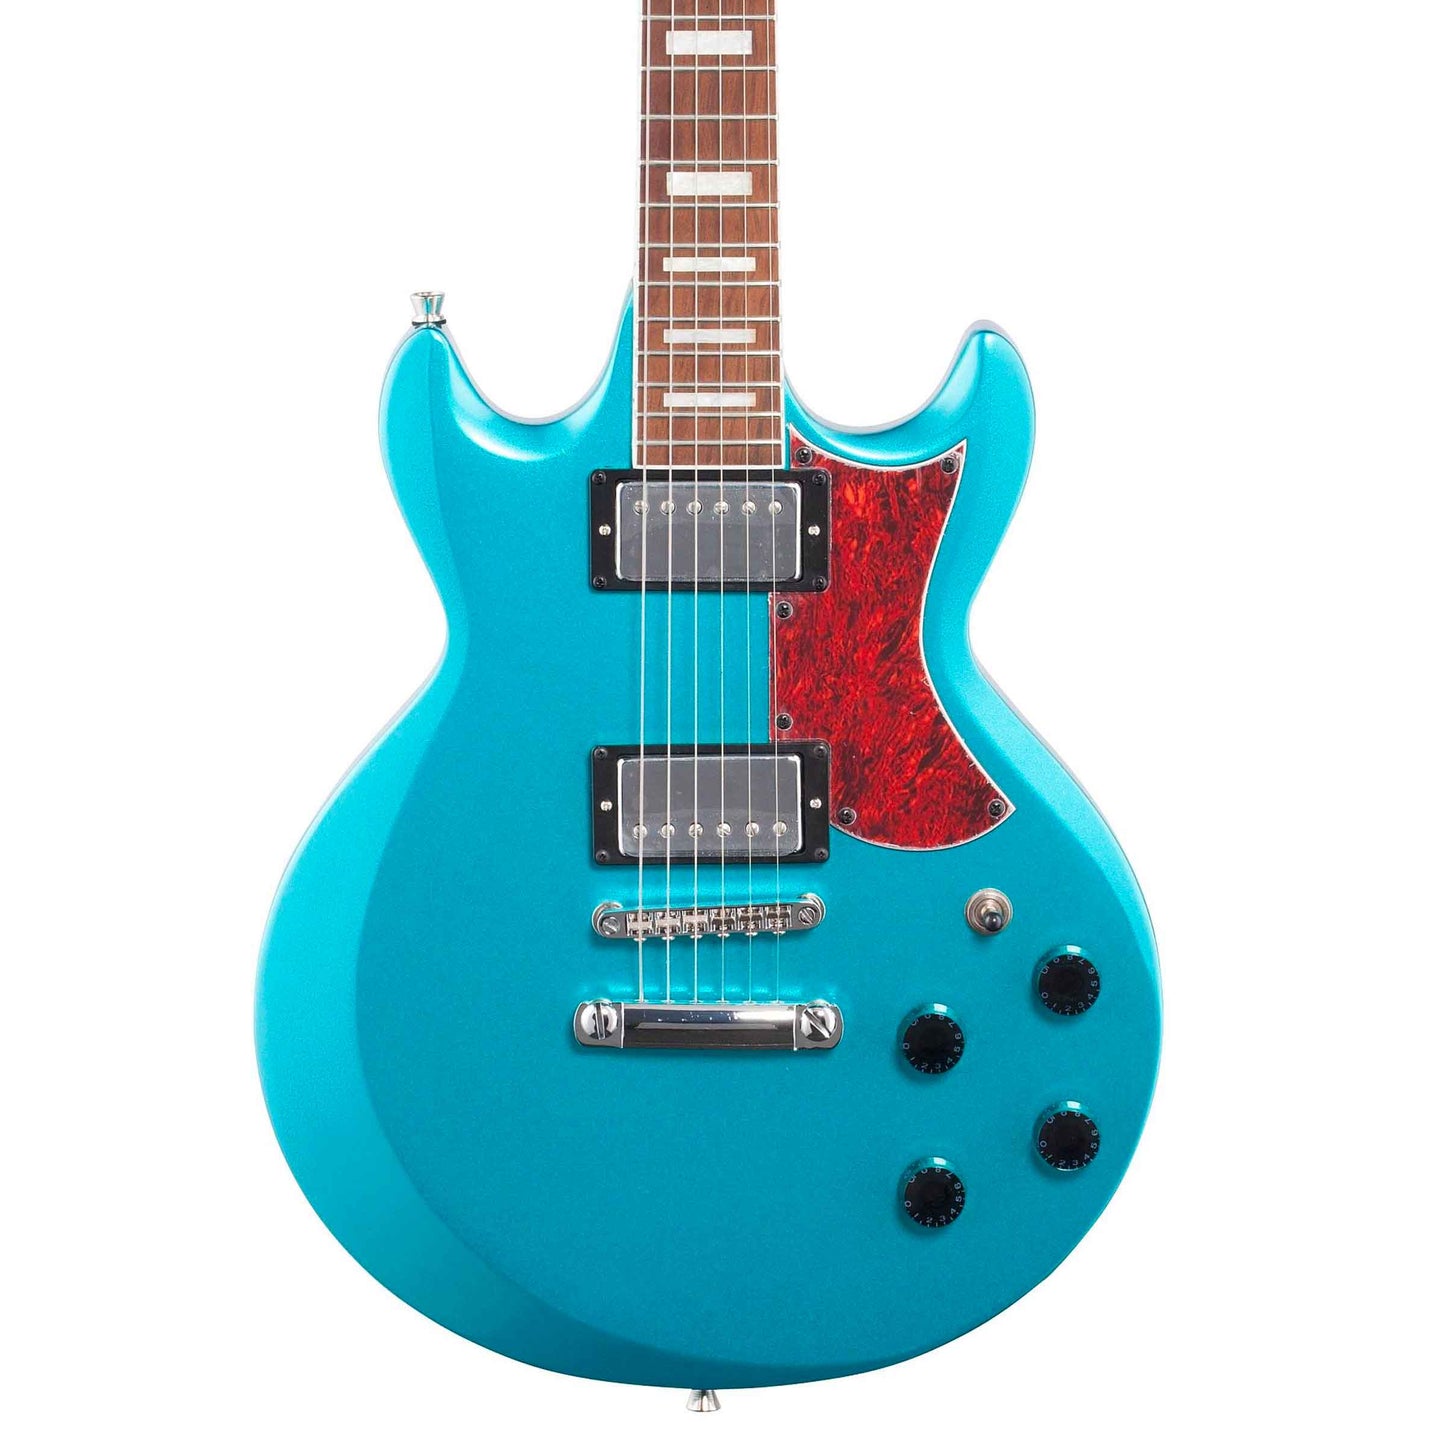 Ibanez AX120 electric guitar in Metallic Light Blue